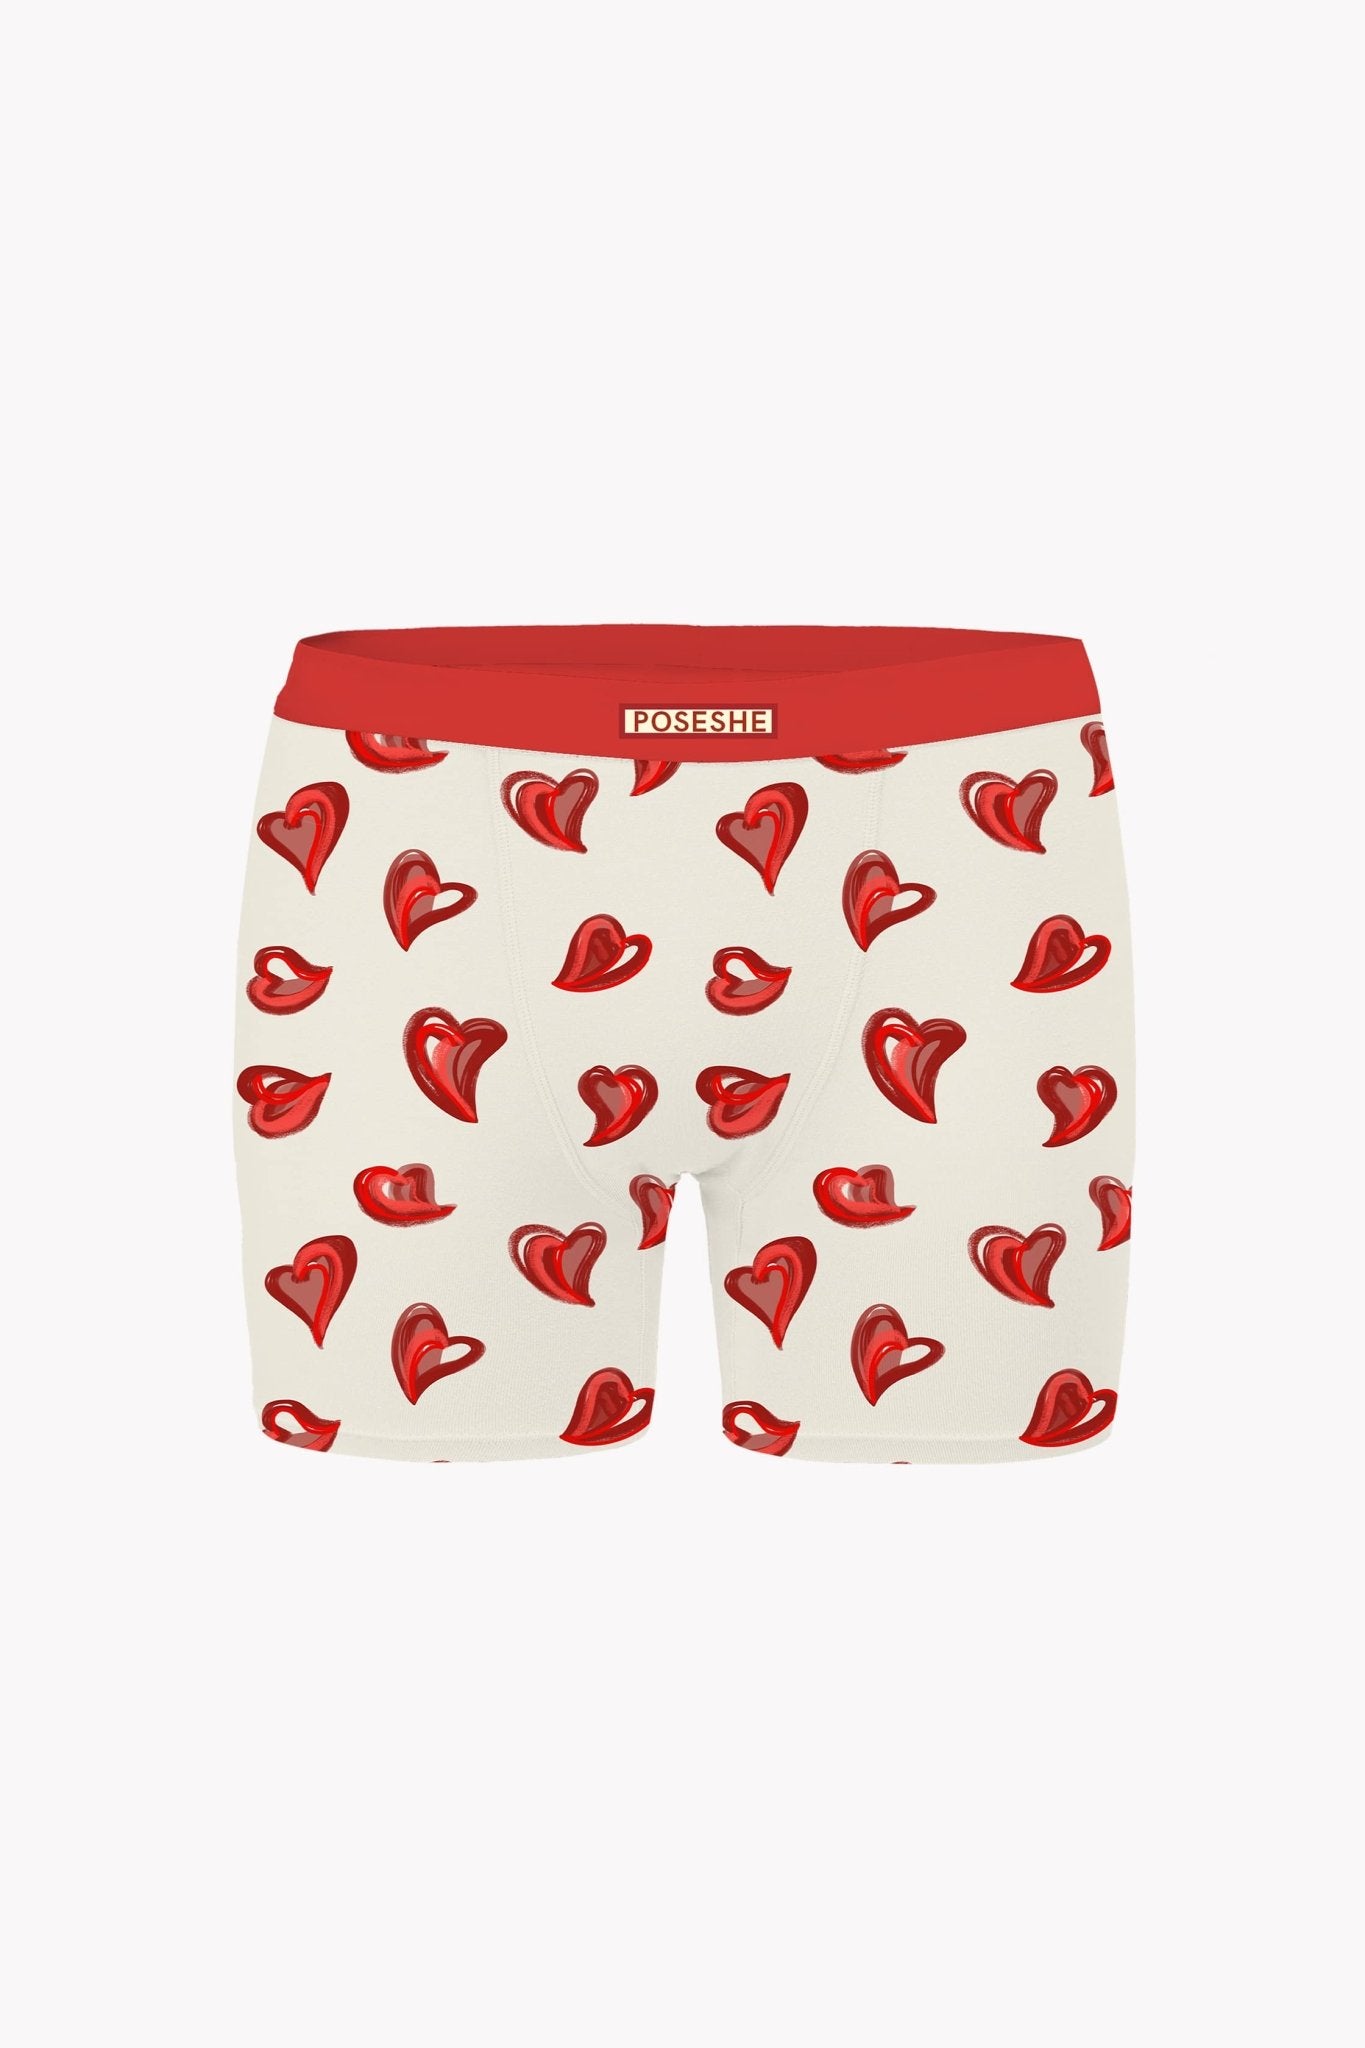 POSESHE Women's Boxer Underwear, Plus Size Boyshorts Panties 6/8 Inseam